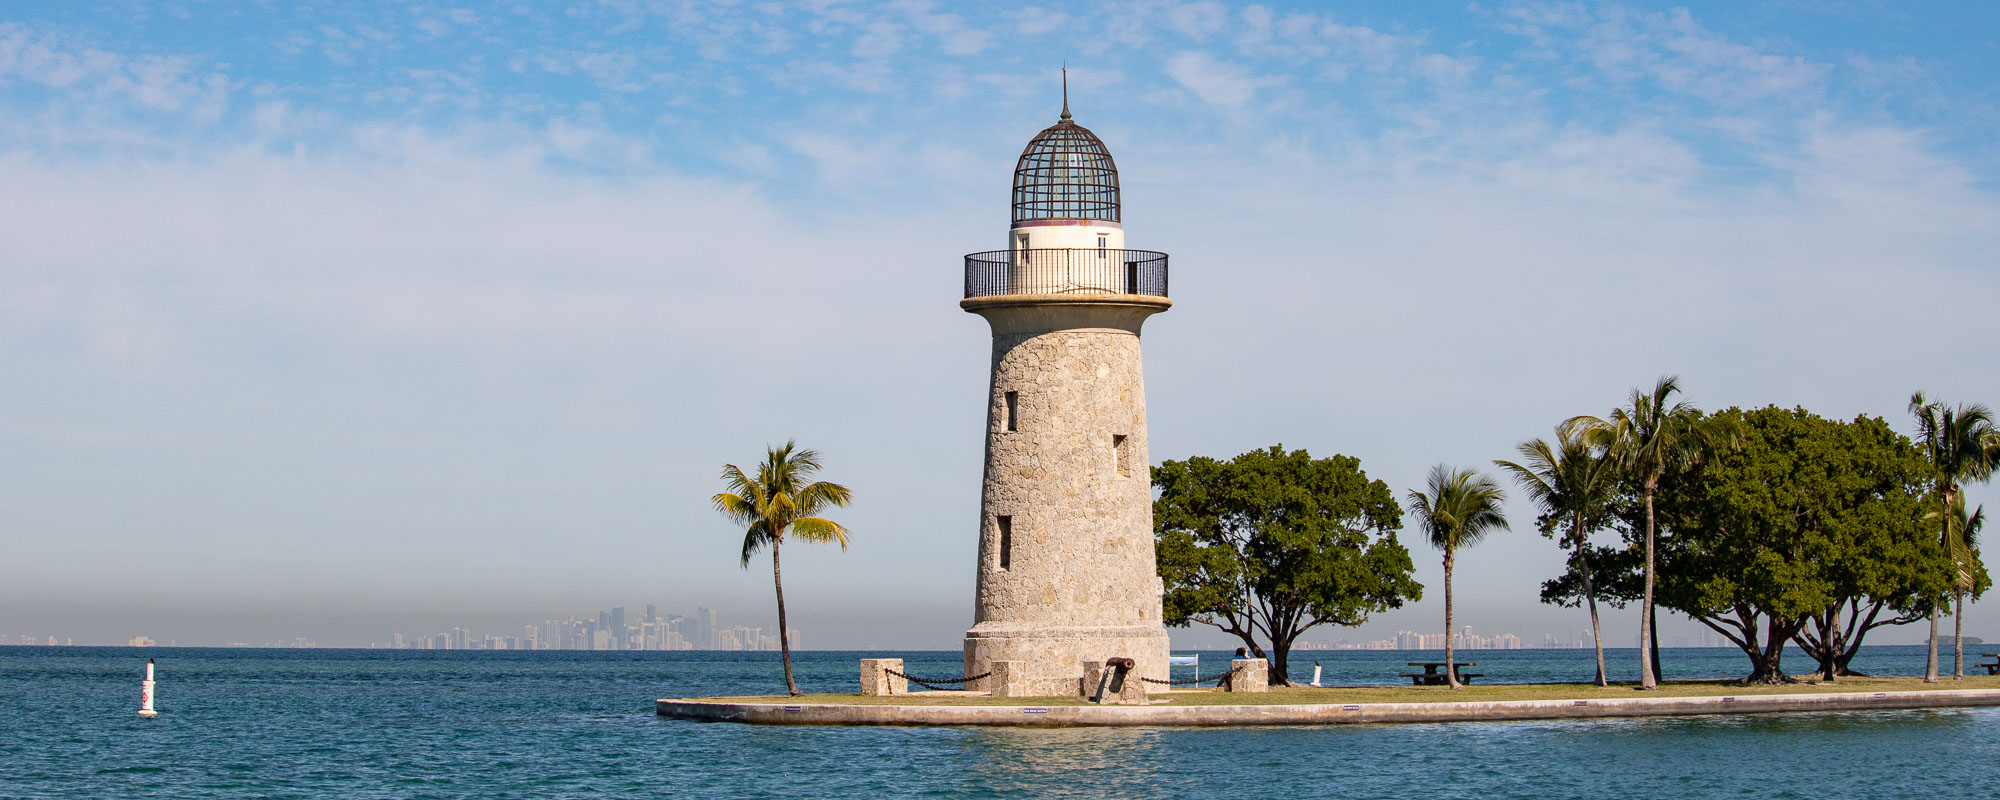 Biscayne National Park - Boca Chita Key Lighthouse and Miami skyline